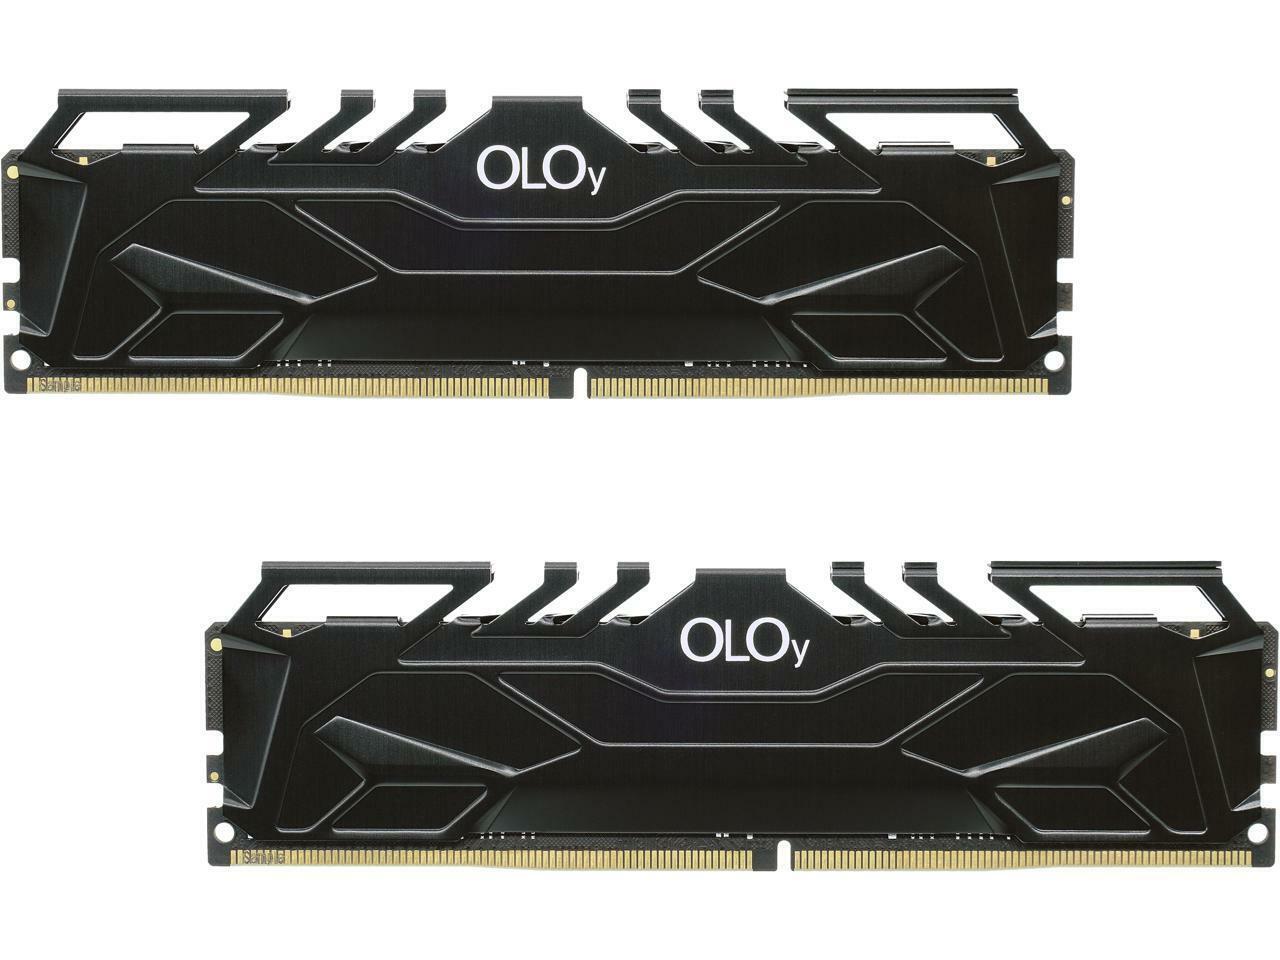 OLOy 16GB (2 x 8GB) PC RAM DDR4 3200 (PC4 25600) Desktop Memory Model MD